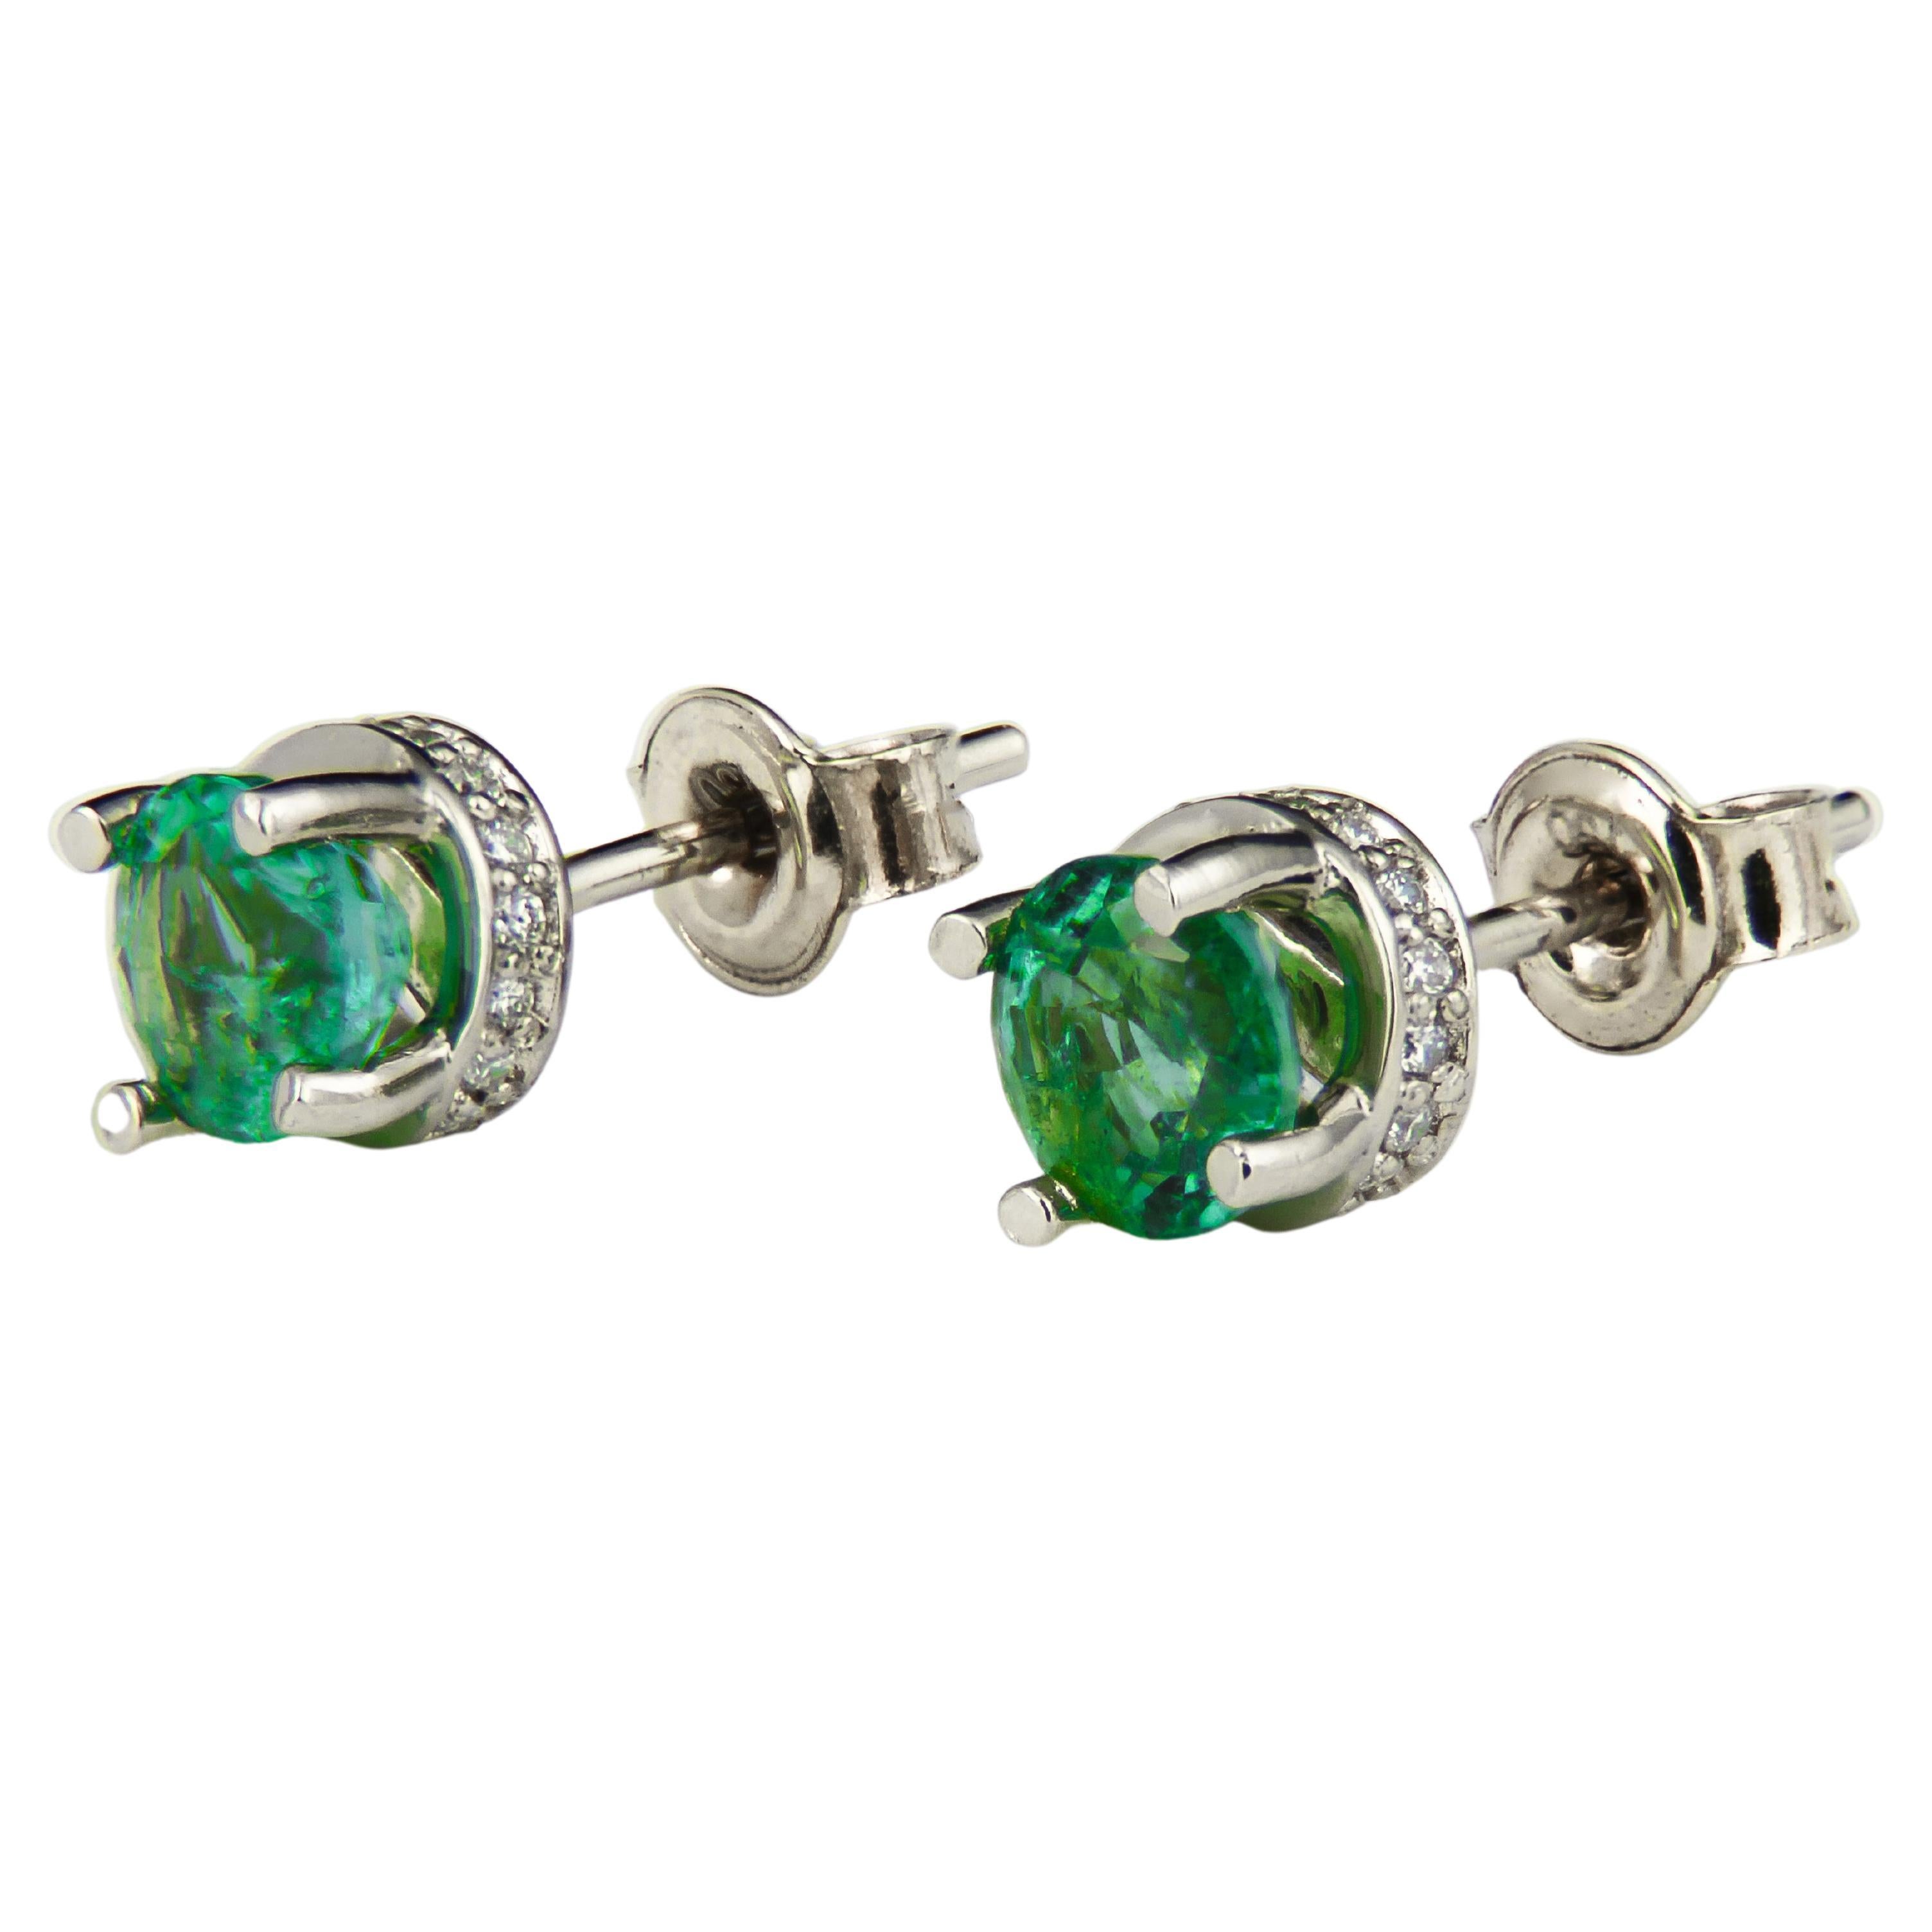 Emeralds and Diamonds 14k Gold Earrings Studs